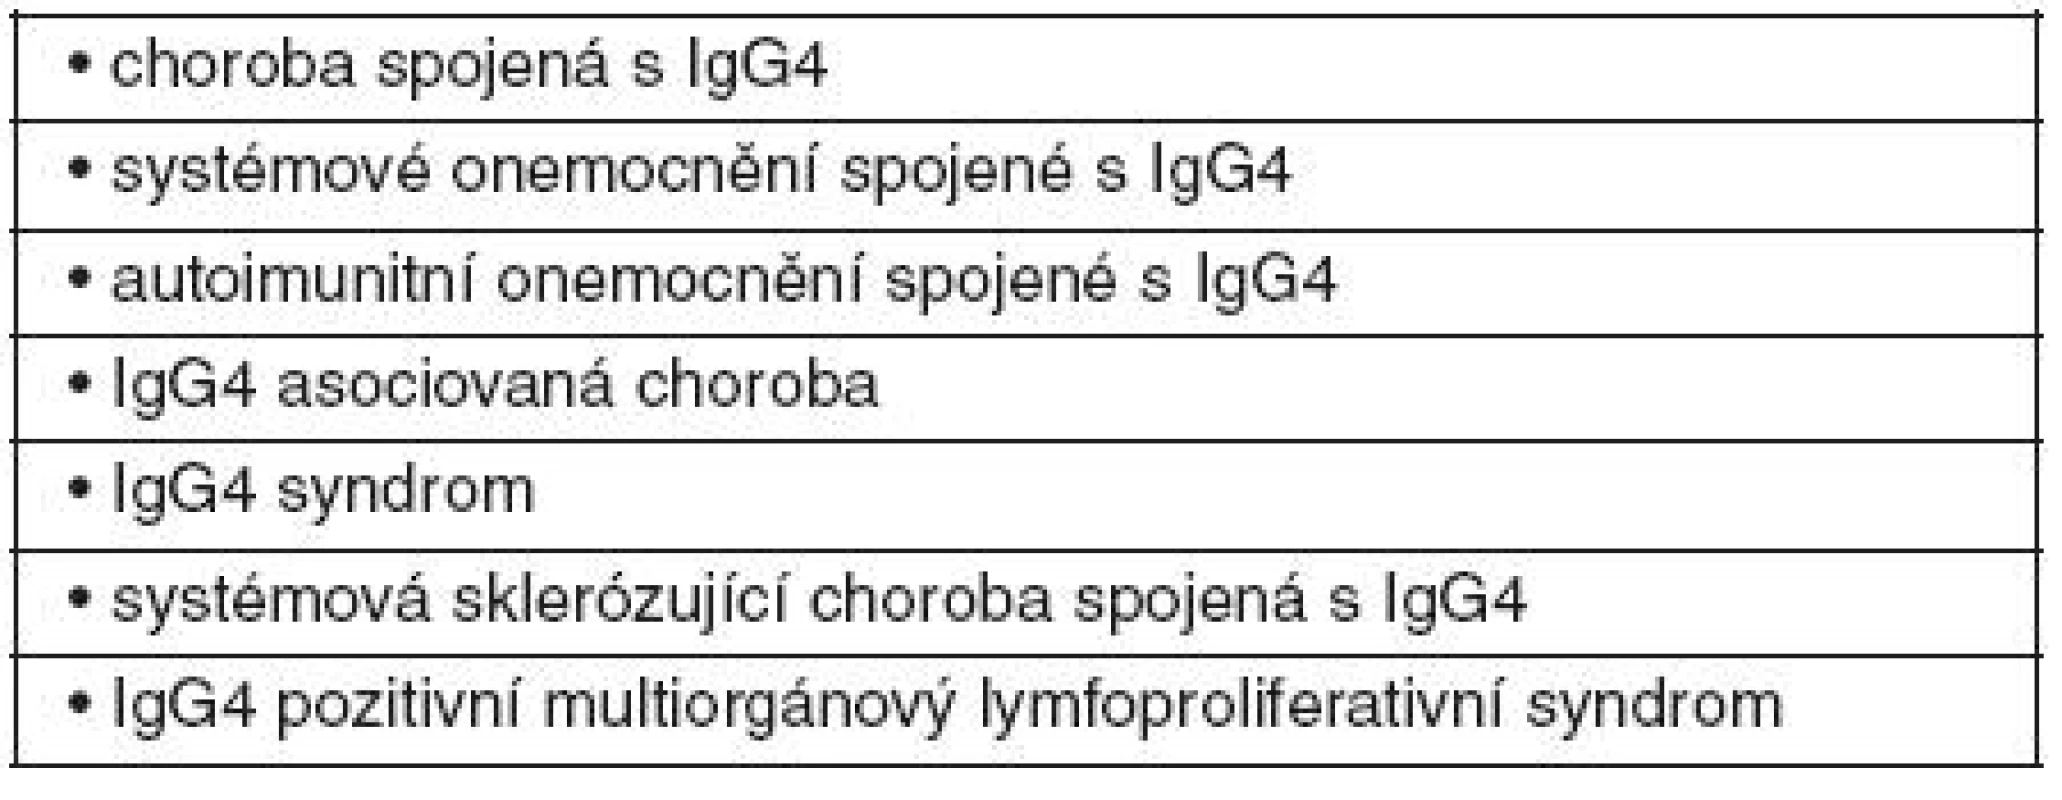 Synonyma v nomenklatuře nemoci spjaté s IgG4